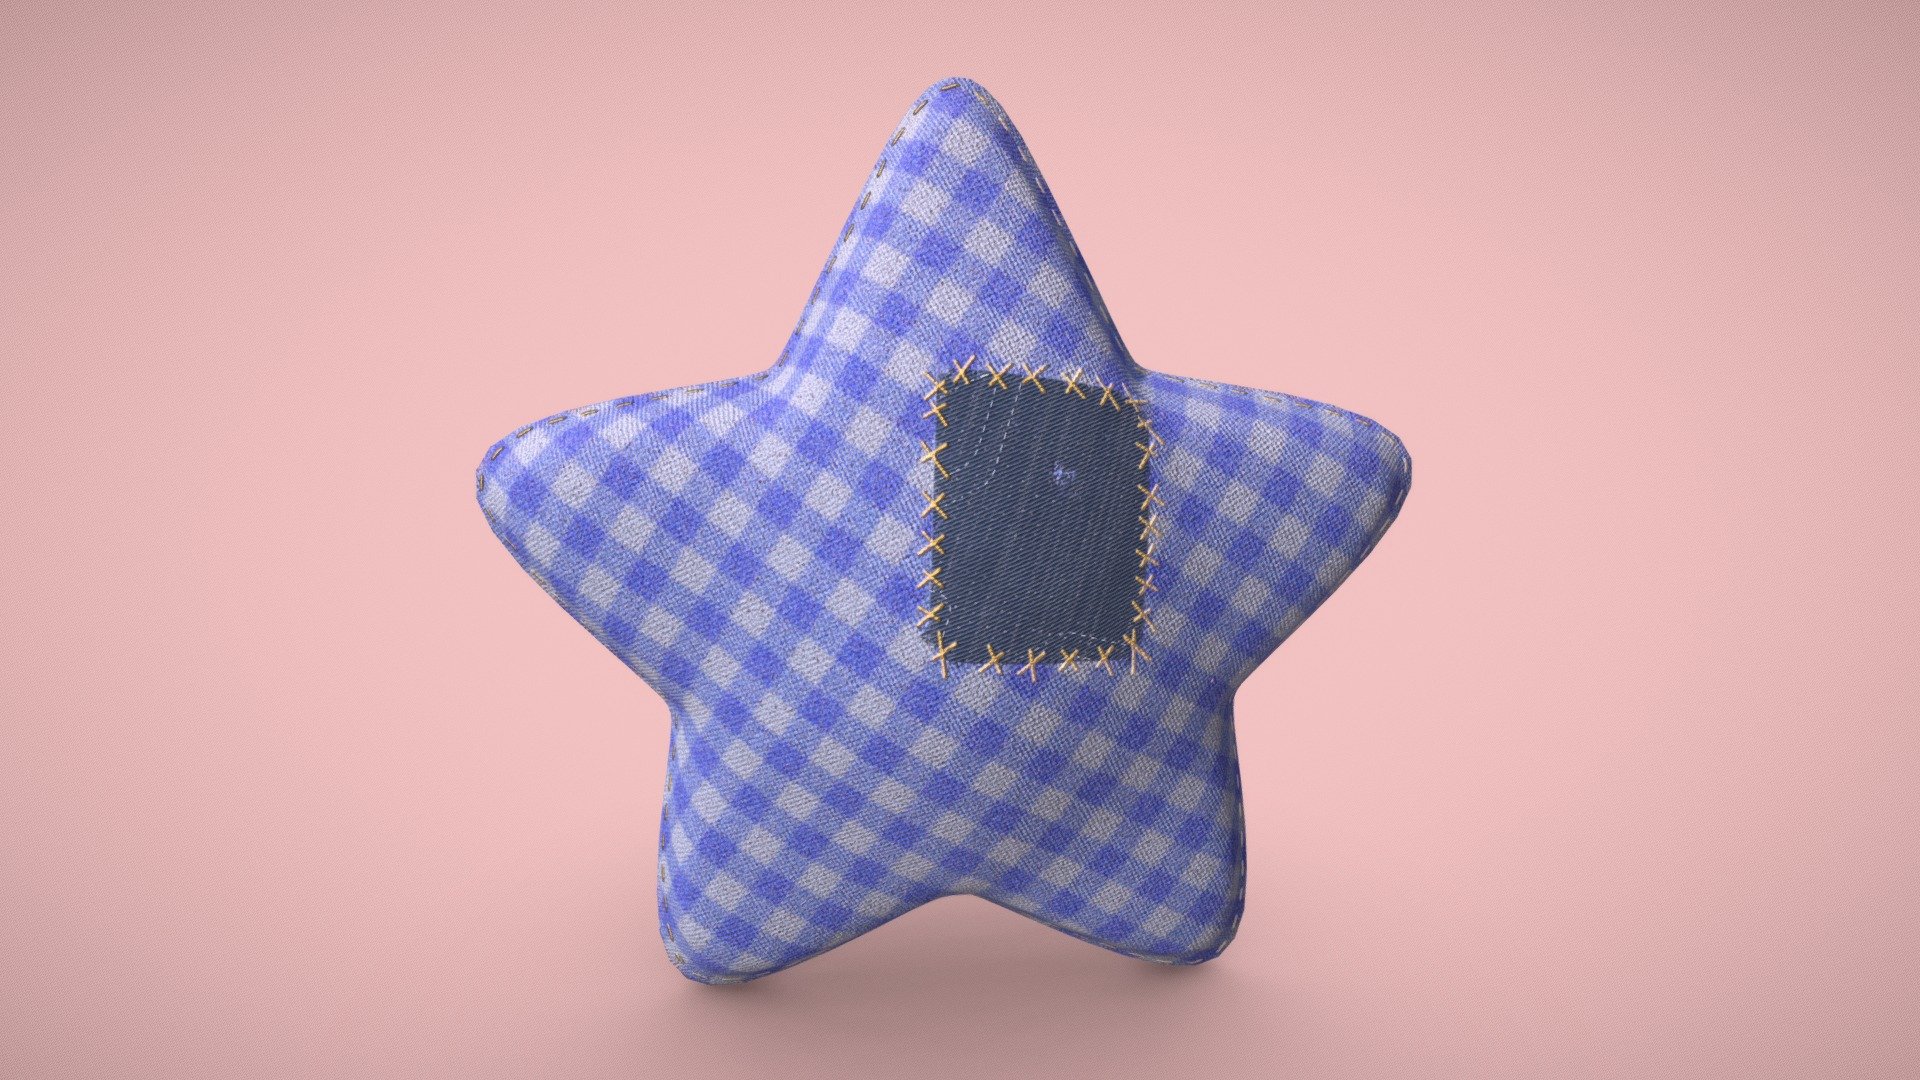 Star soft toy